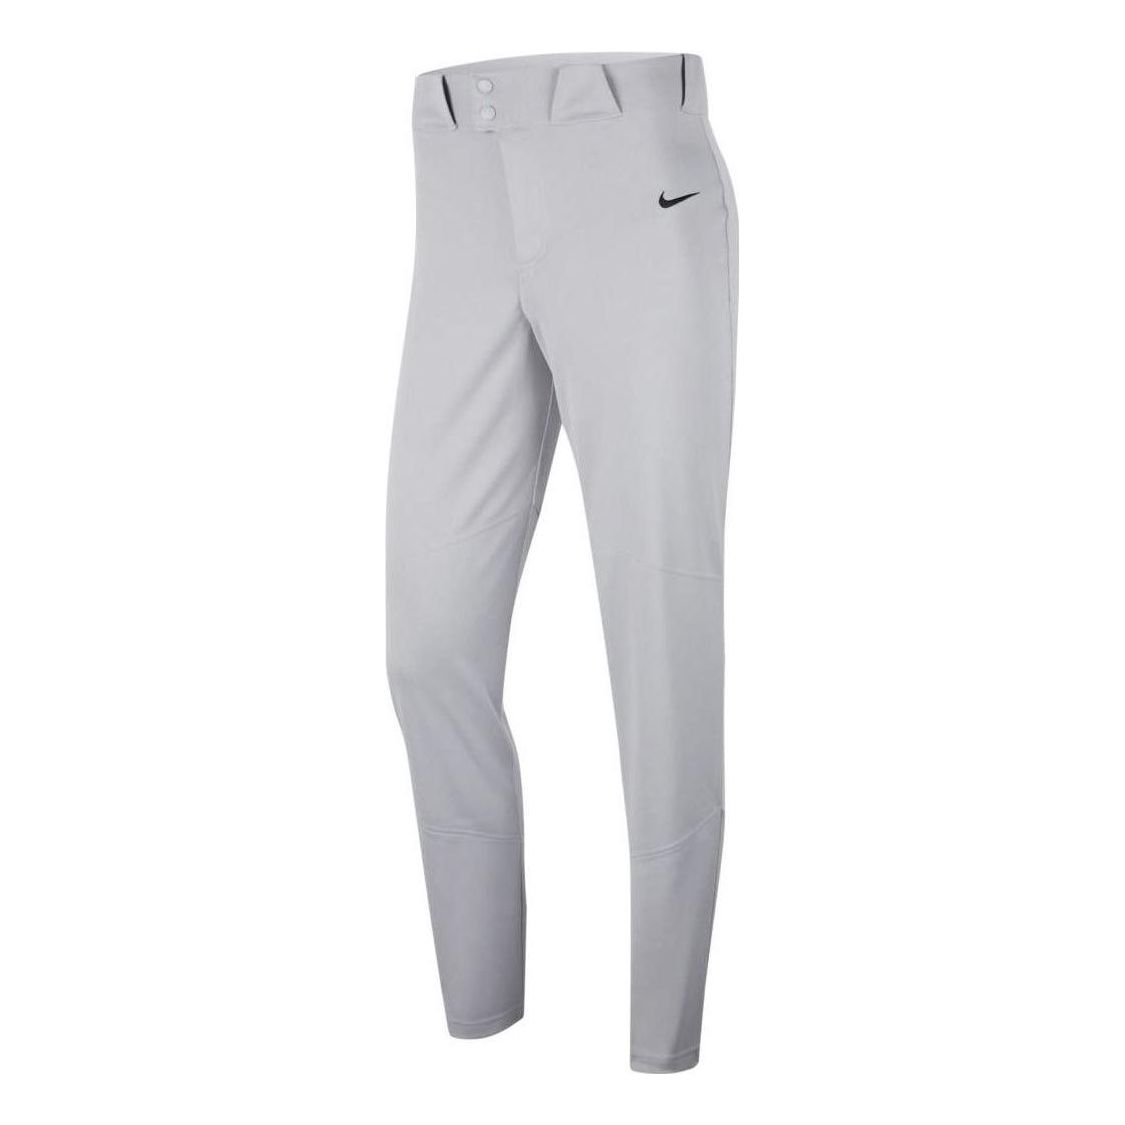 Men's Nike Buckle Zipper Solid Color Casual Pants/Trousers Gray BQ6345